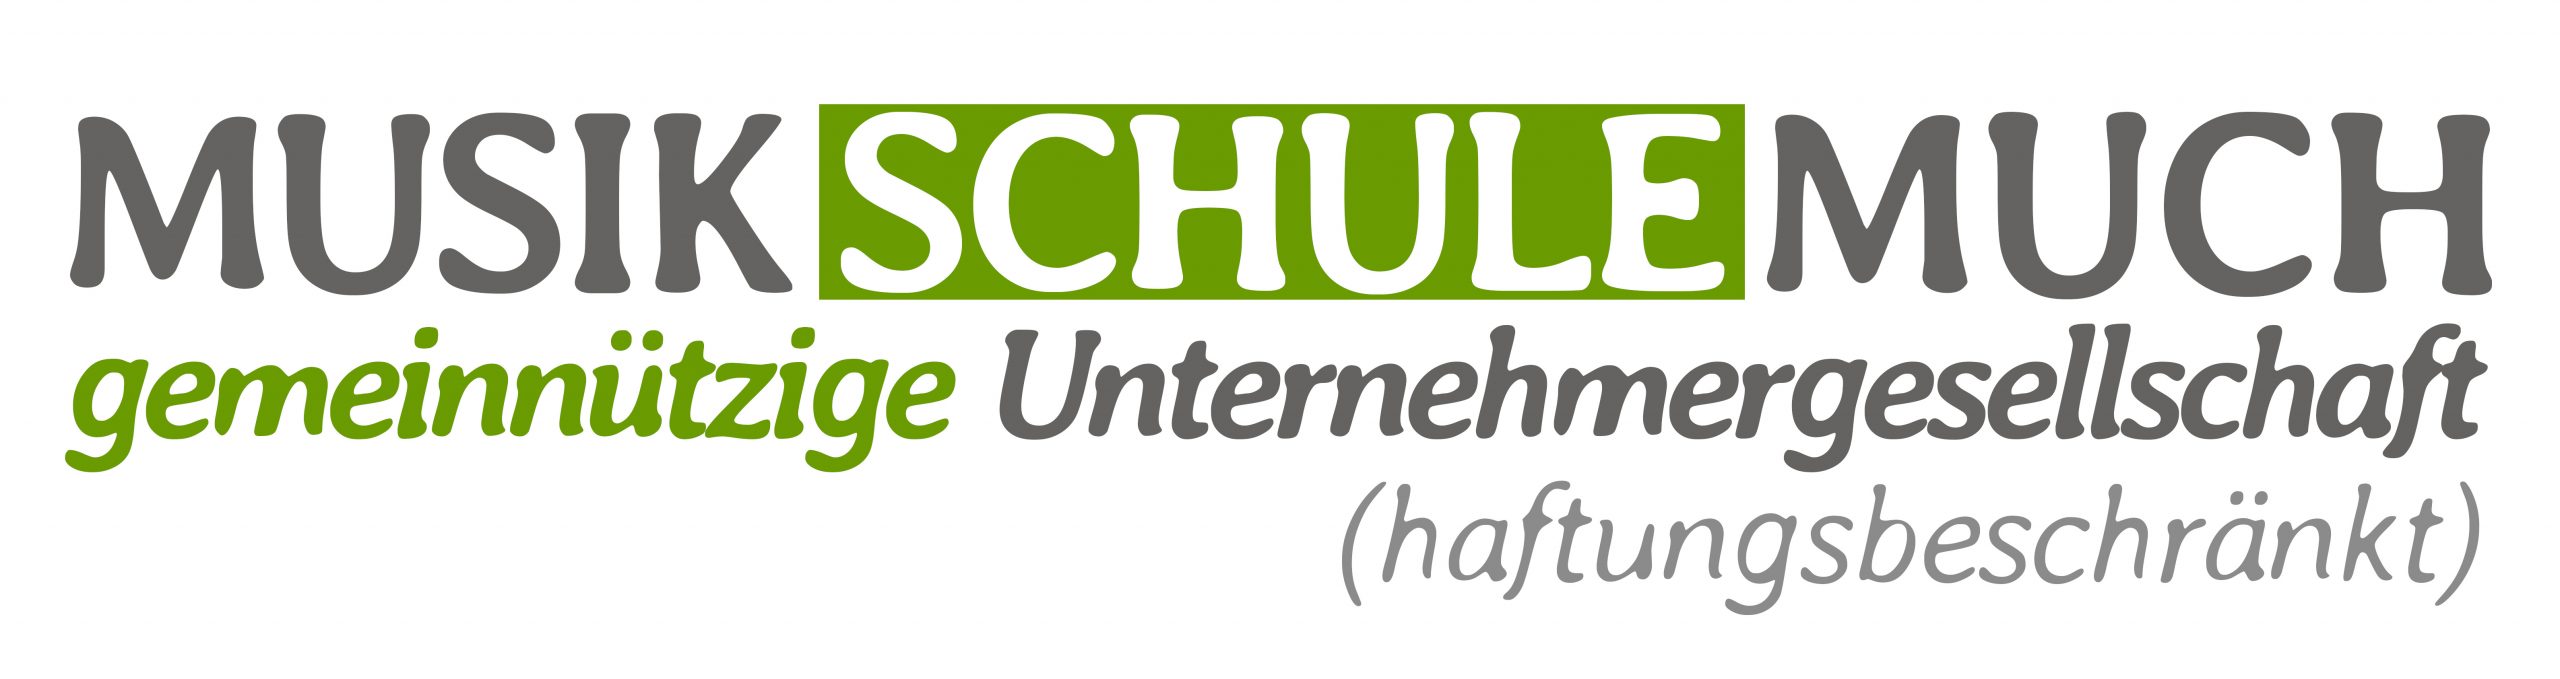 Logo Musikschule Much